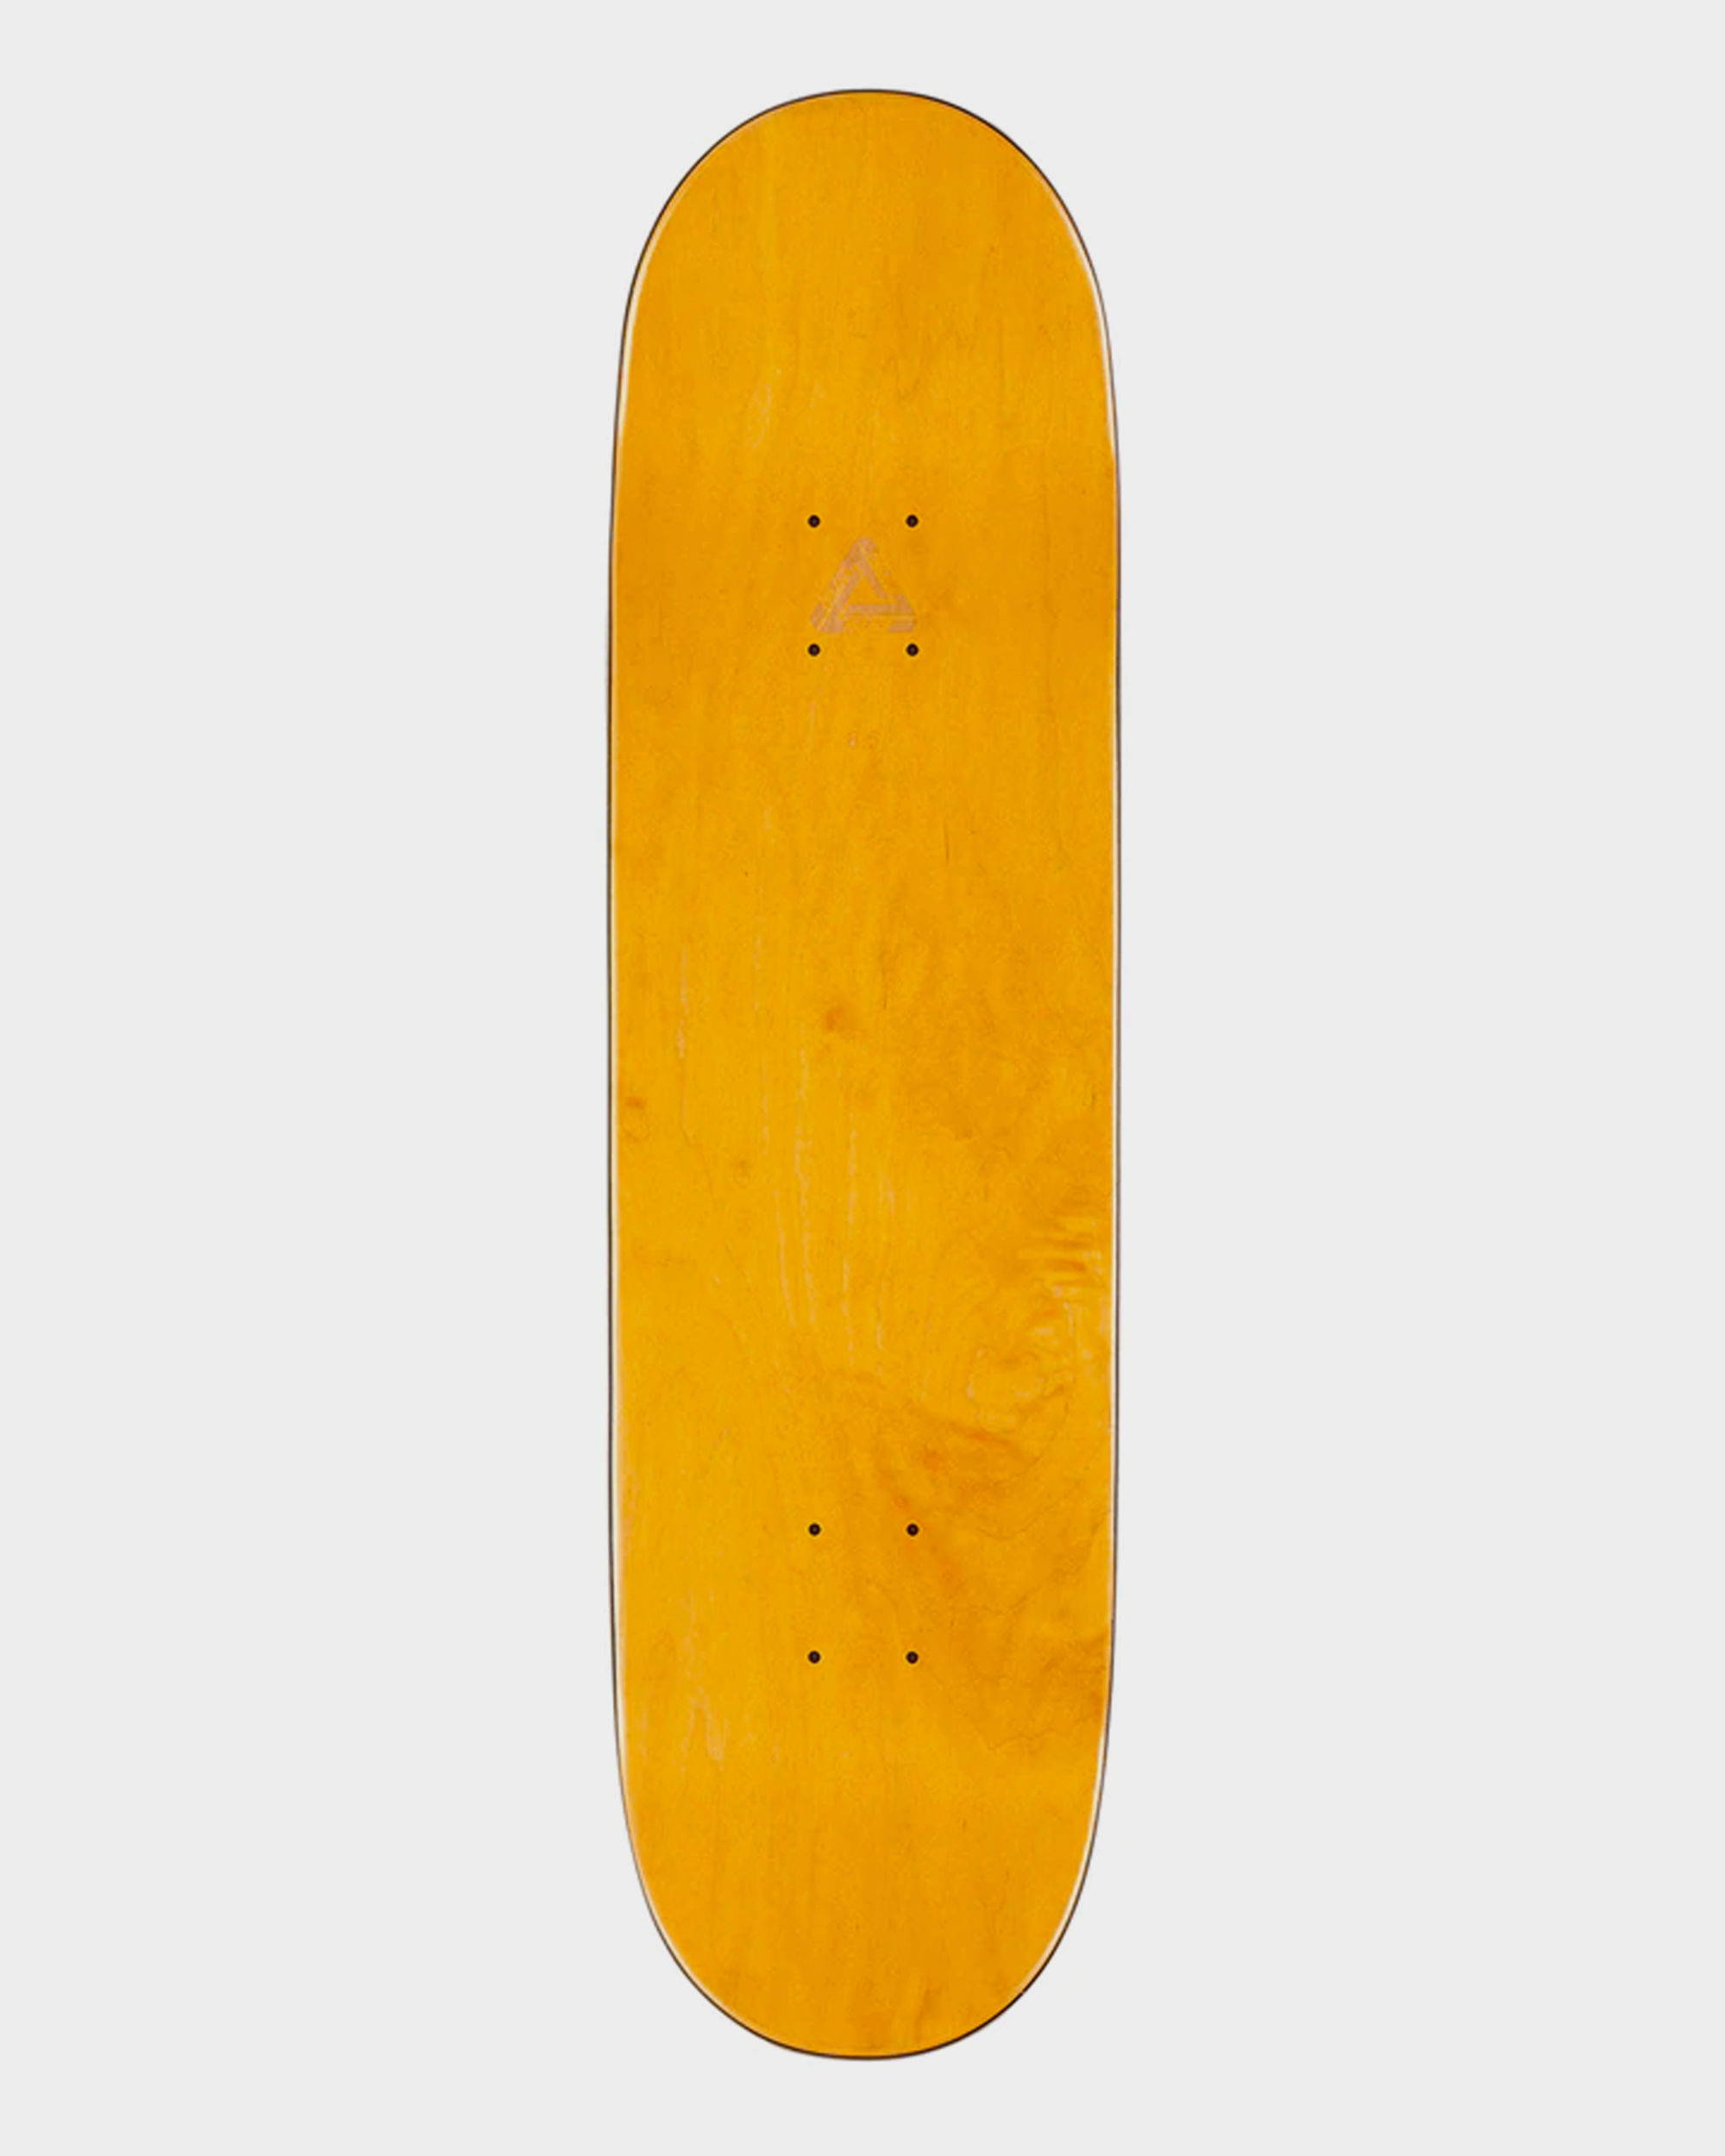 Palace Skateboards S28 Clarke Pro Deck – ARROW & BEAST